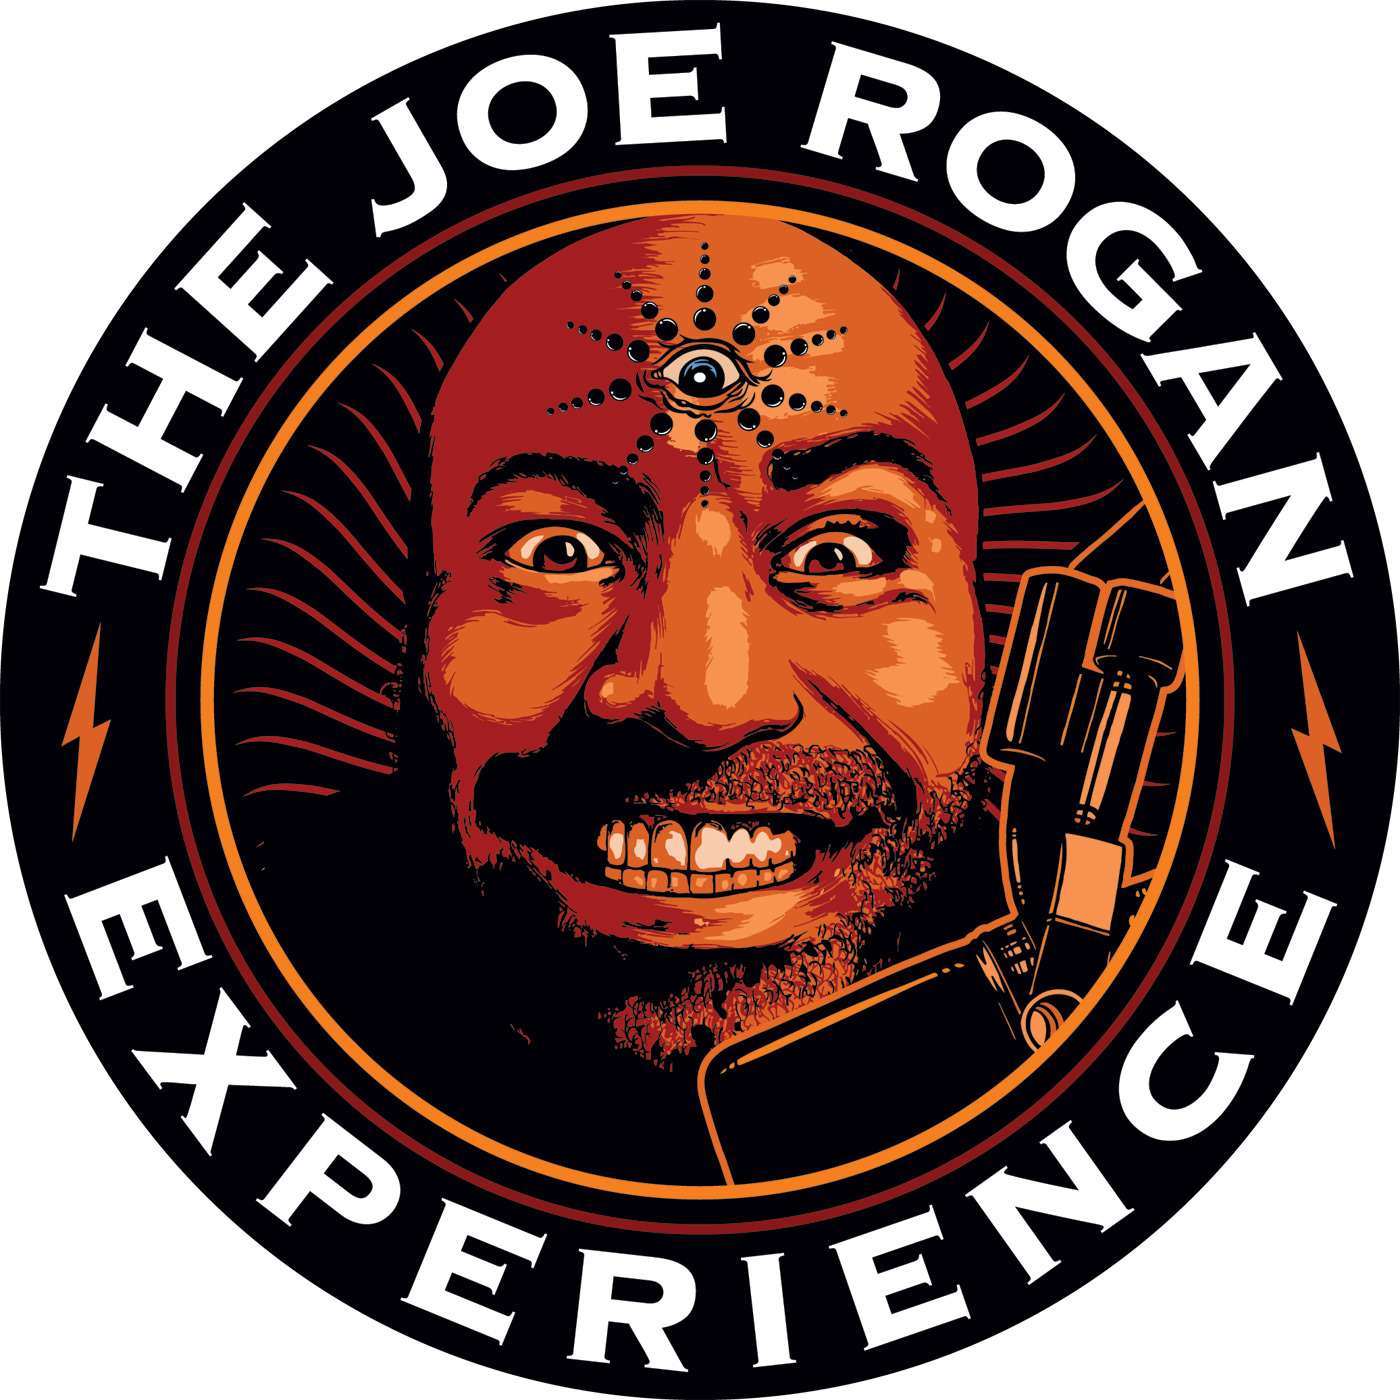 Joe Rogan best British podcast